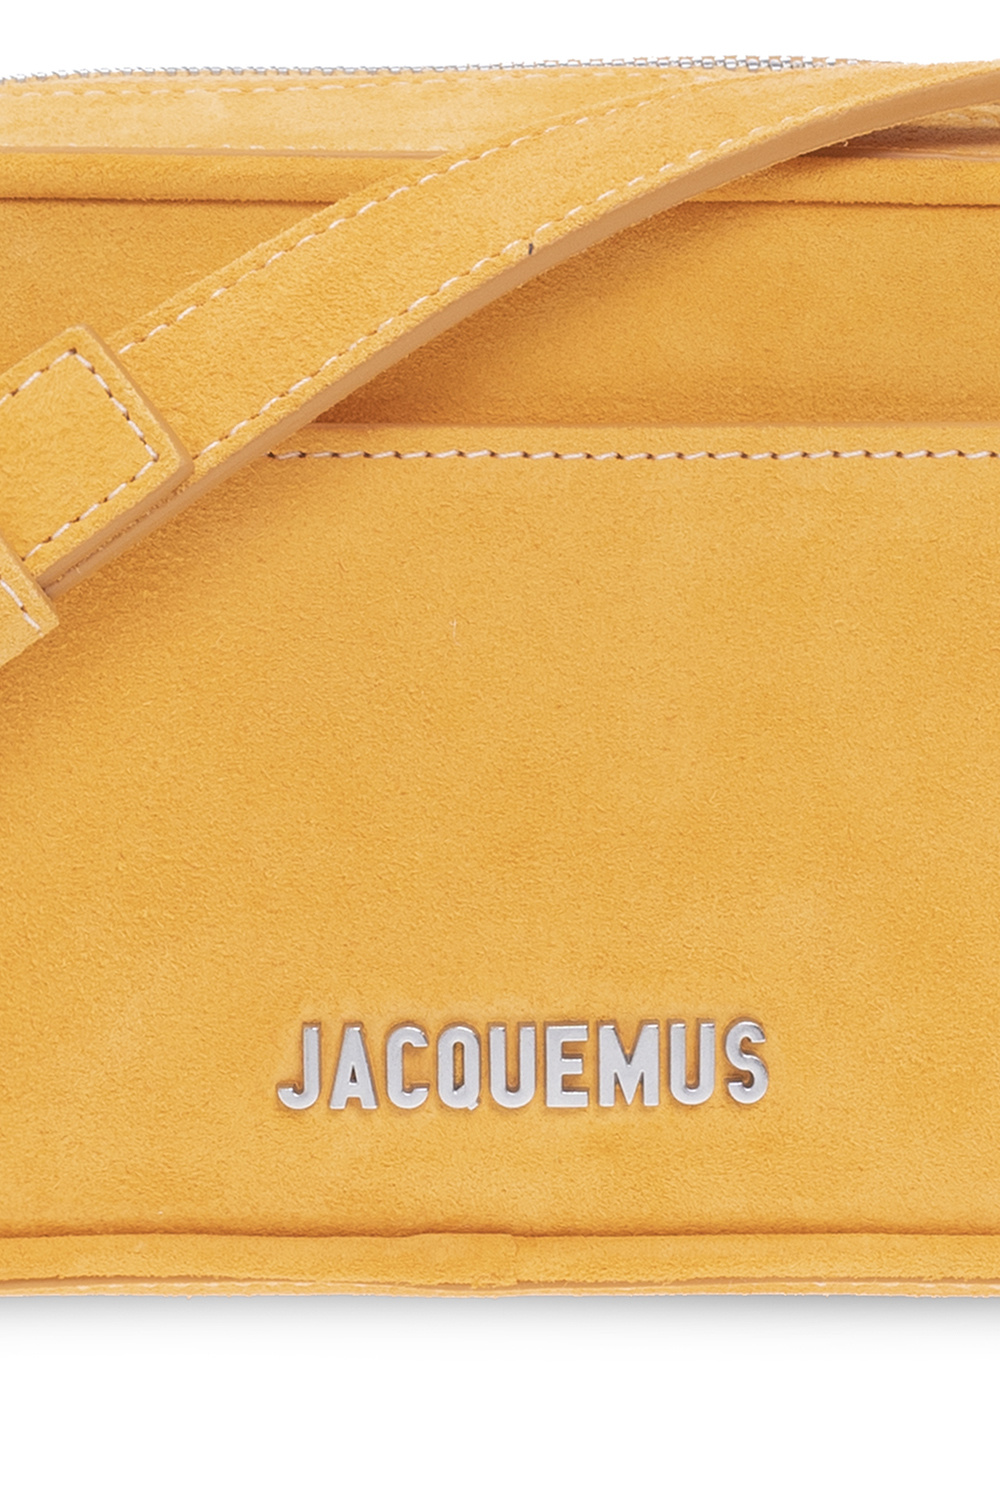 Jacquemus ‘Le Ciuciu’ shoulder bag